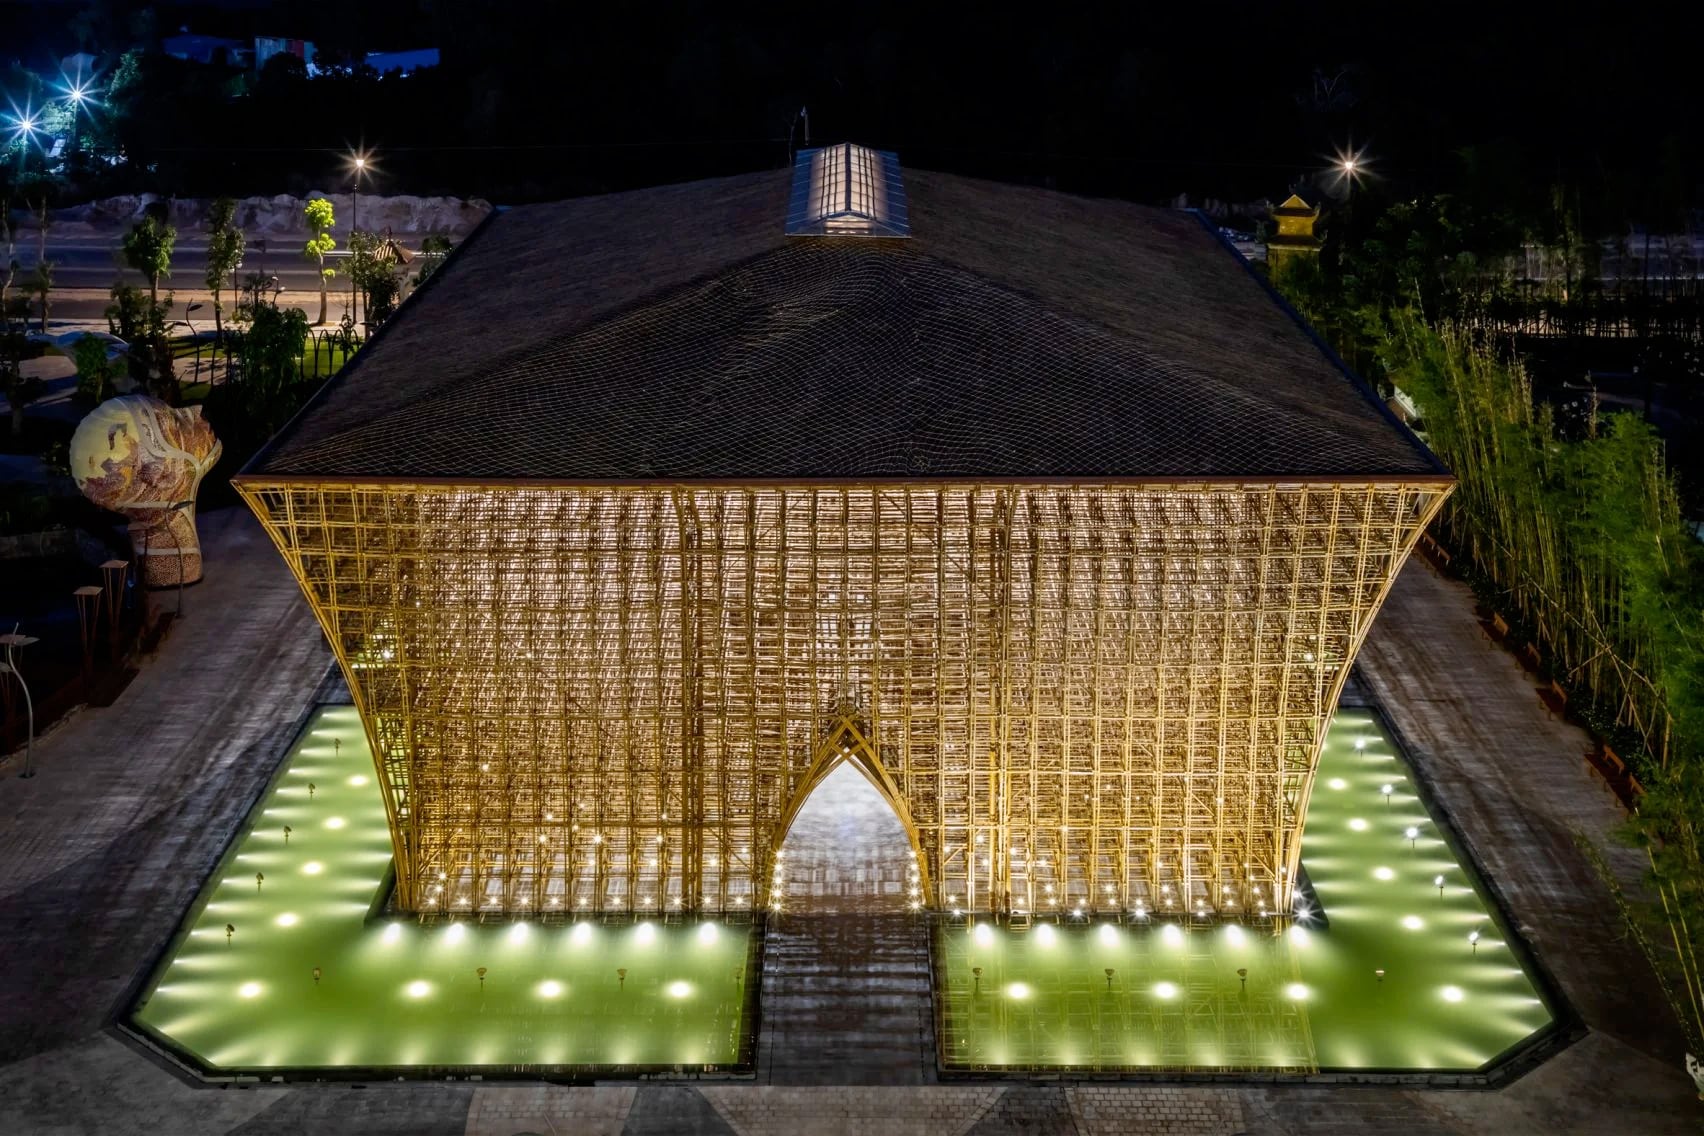 construccion en bambu sarquitectura verde vietnam estudio arquitectura